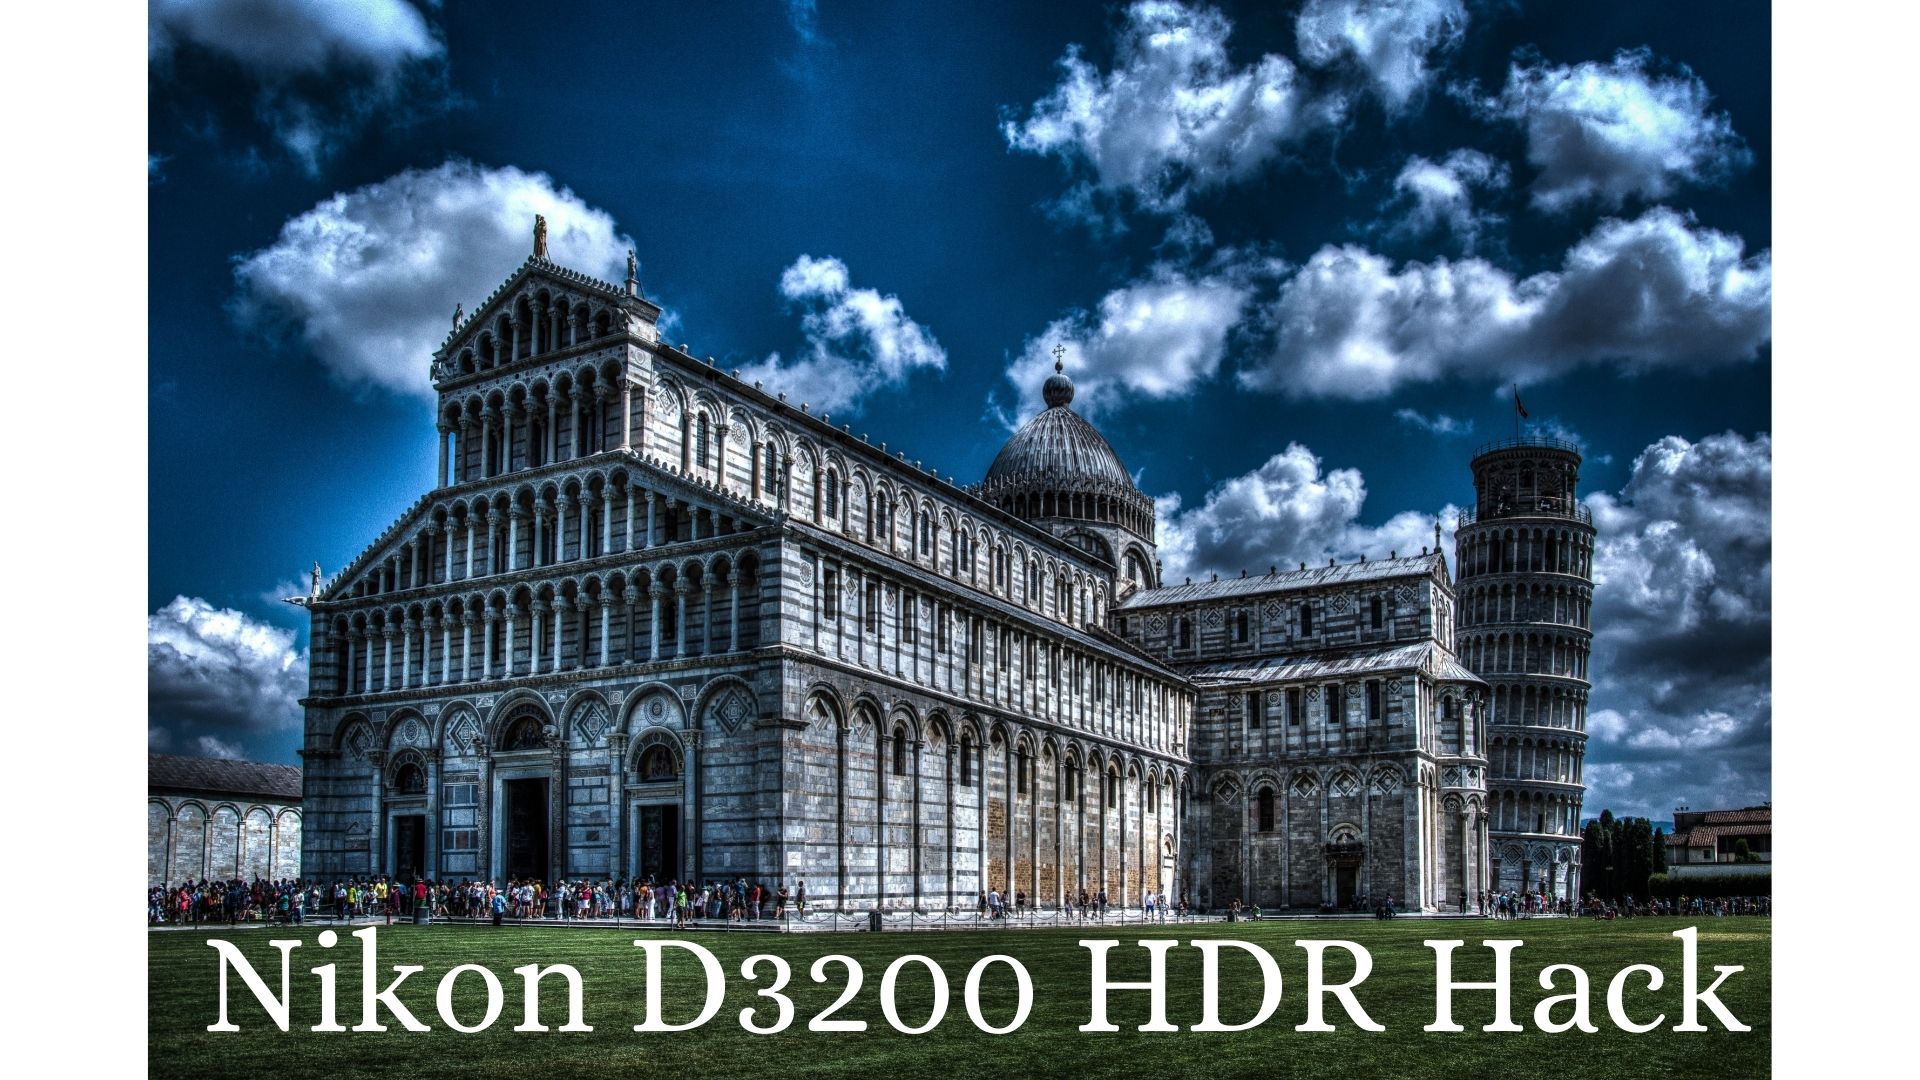 Nikon D3200 HDR photography